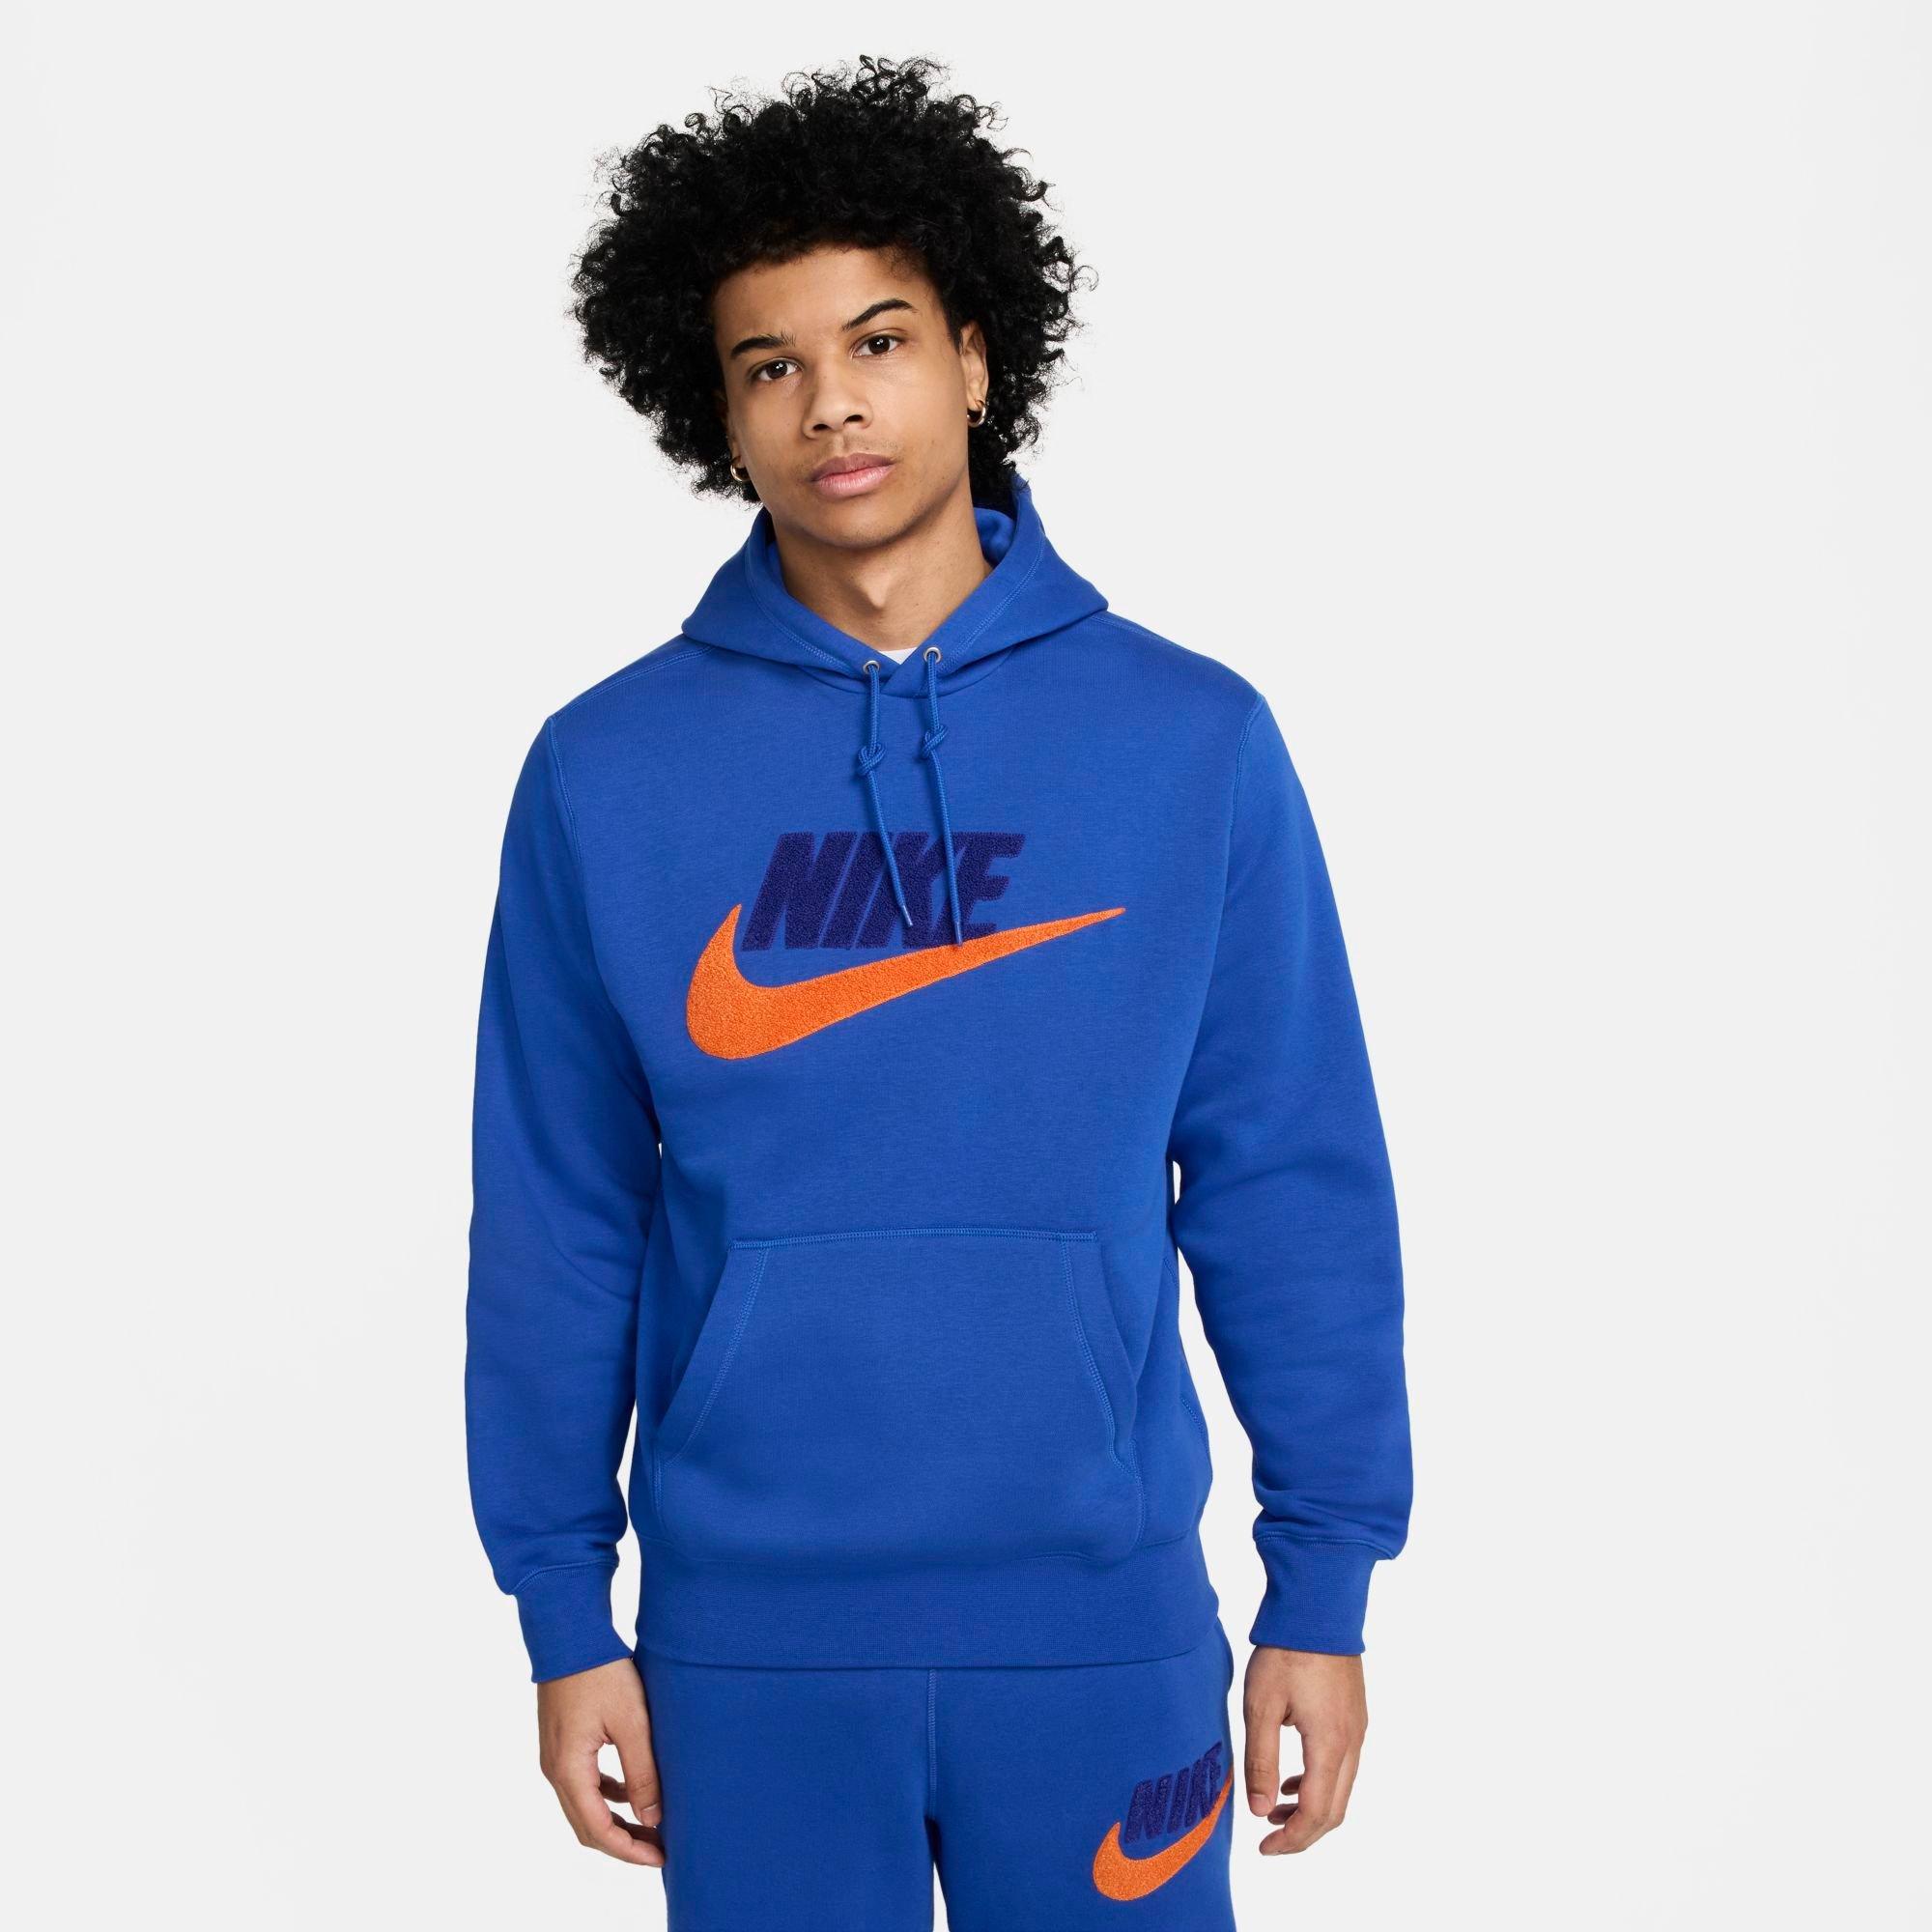 Men's Nike Club Fleece Chenille Futura Pullover Hoodie